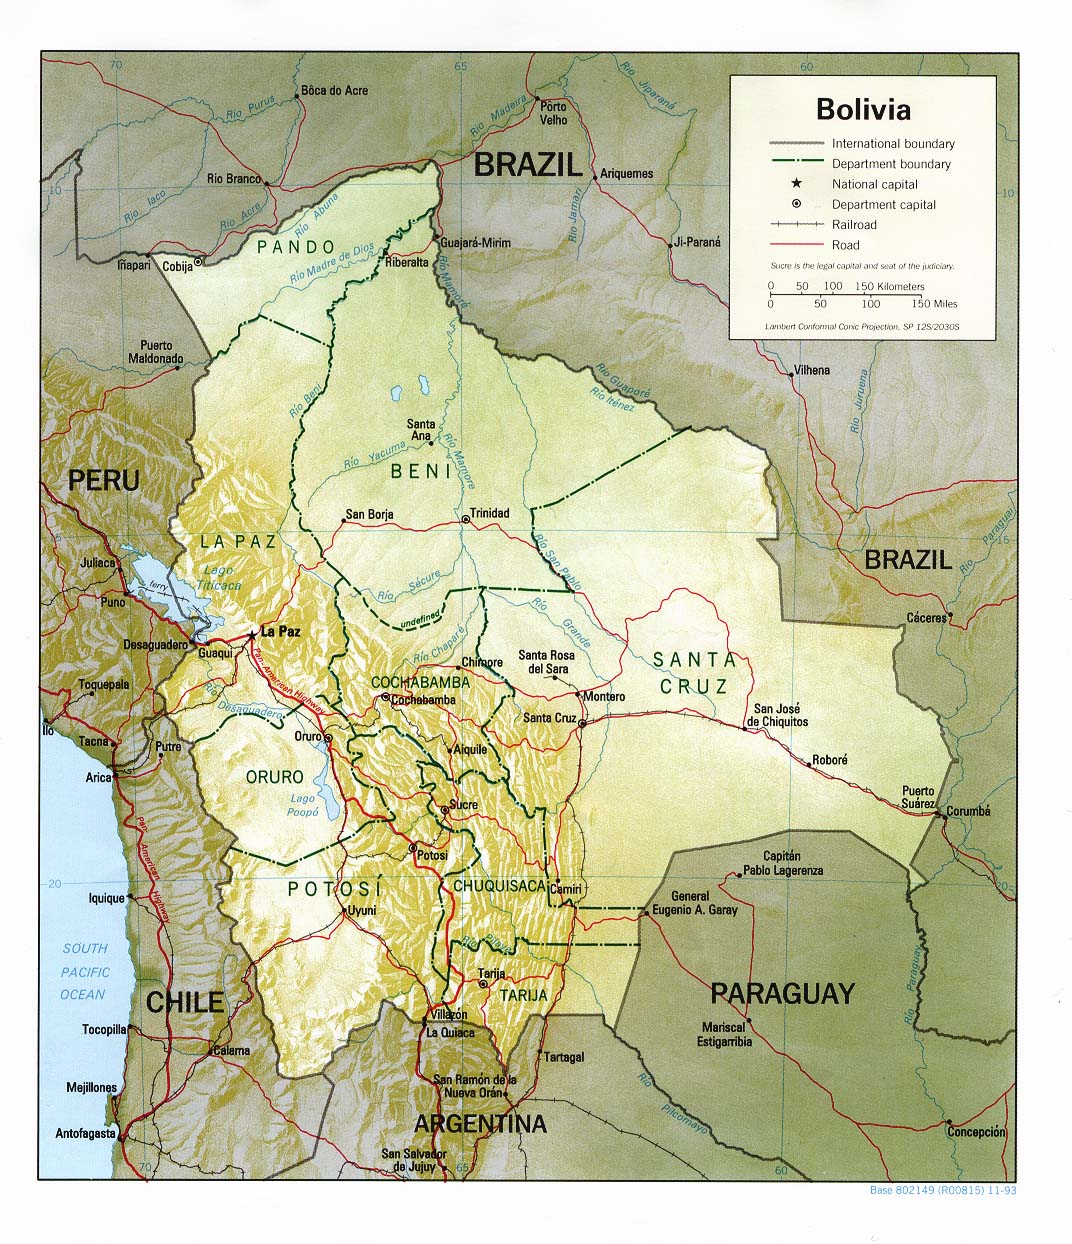 Mapa Relieve Sombreado de Bolivia